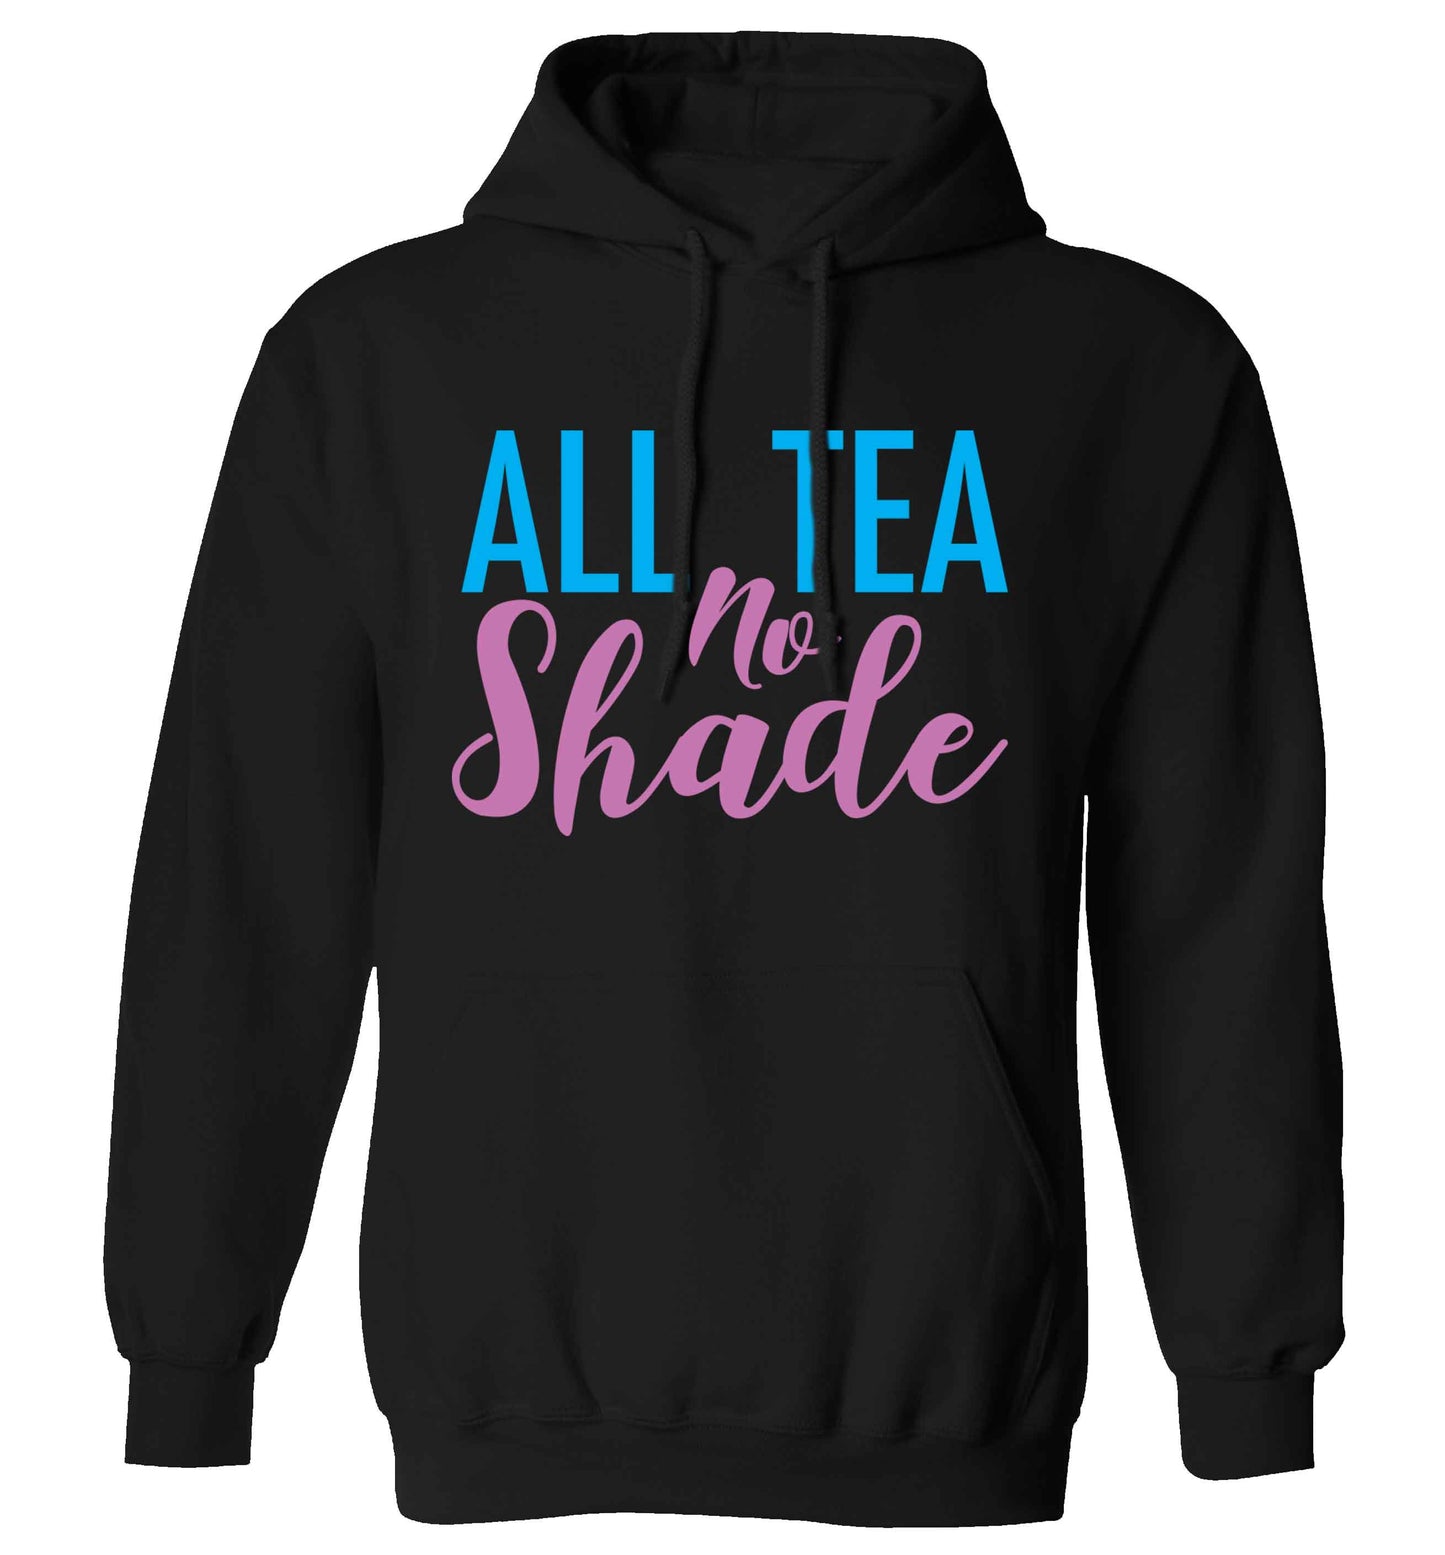 All tea no shade adults unisex black hoodie 2XL